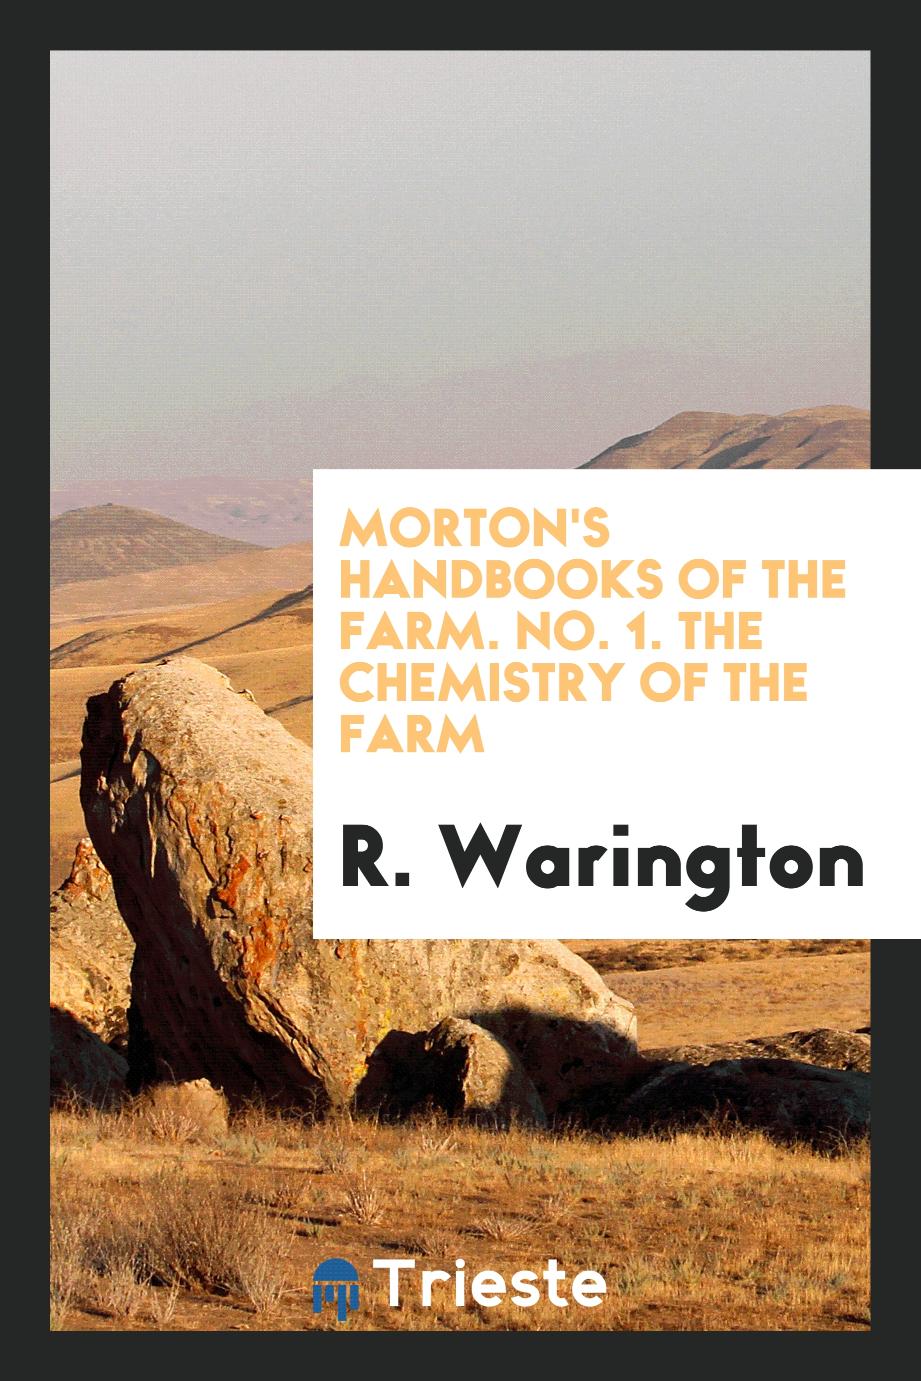 Morton's Handbooks of the Farm. No. 1. The Chemistry of the Farm